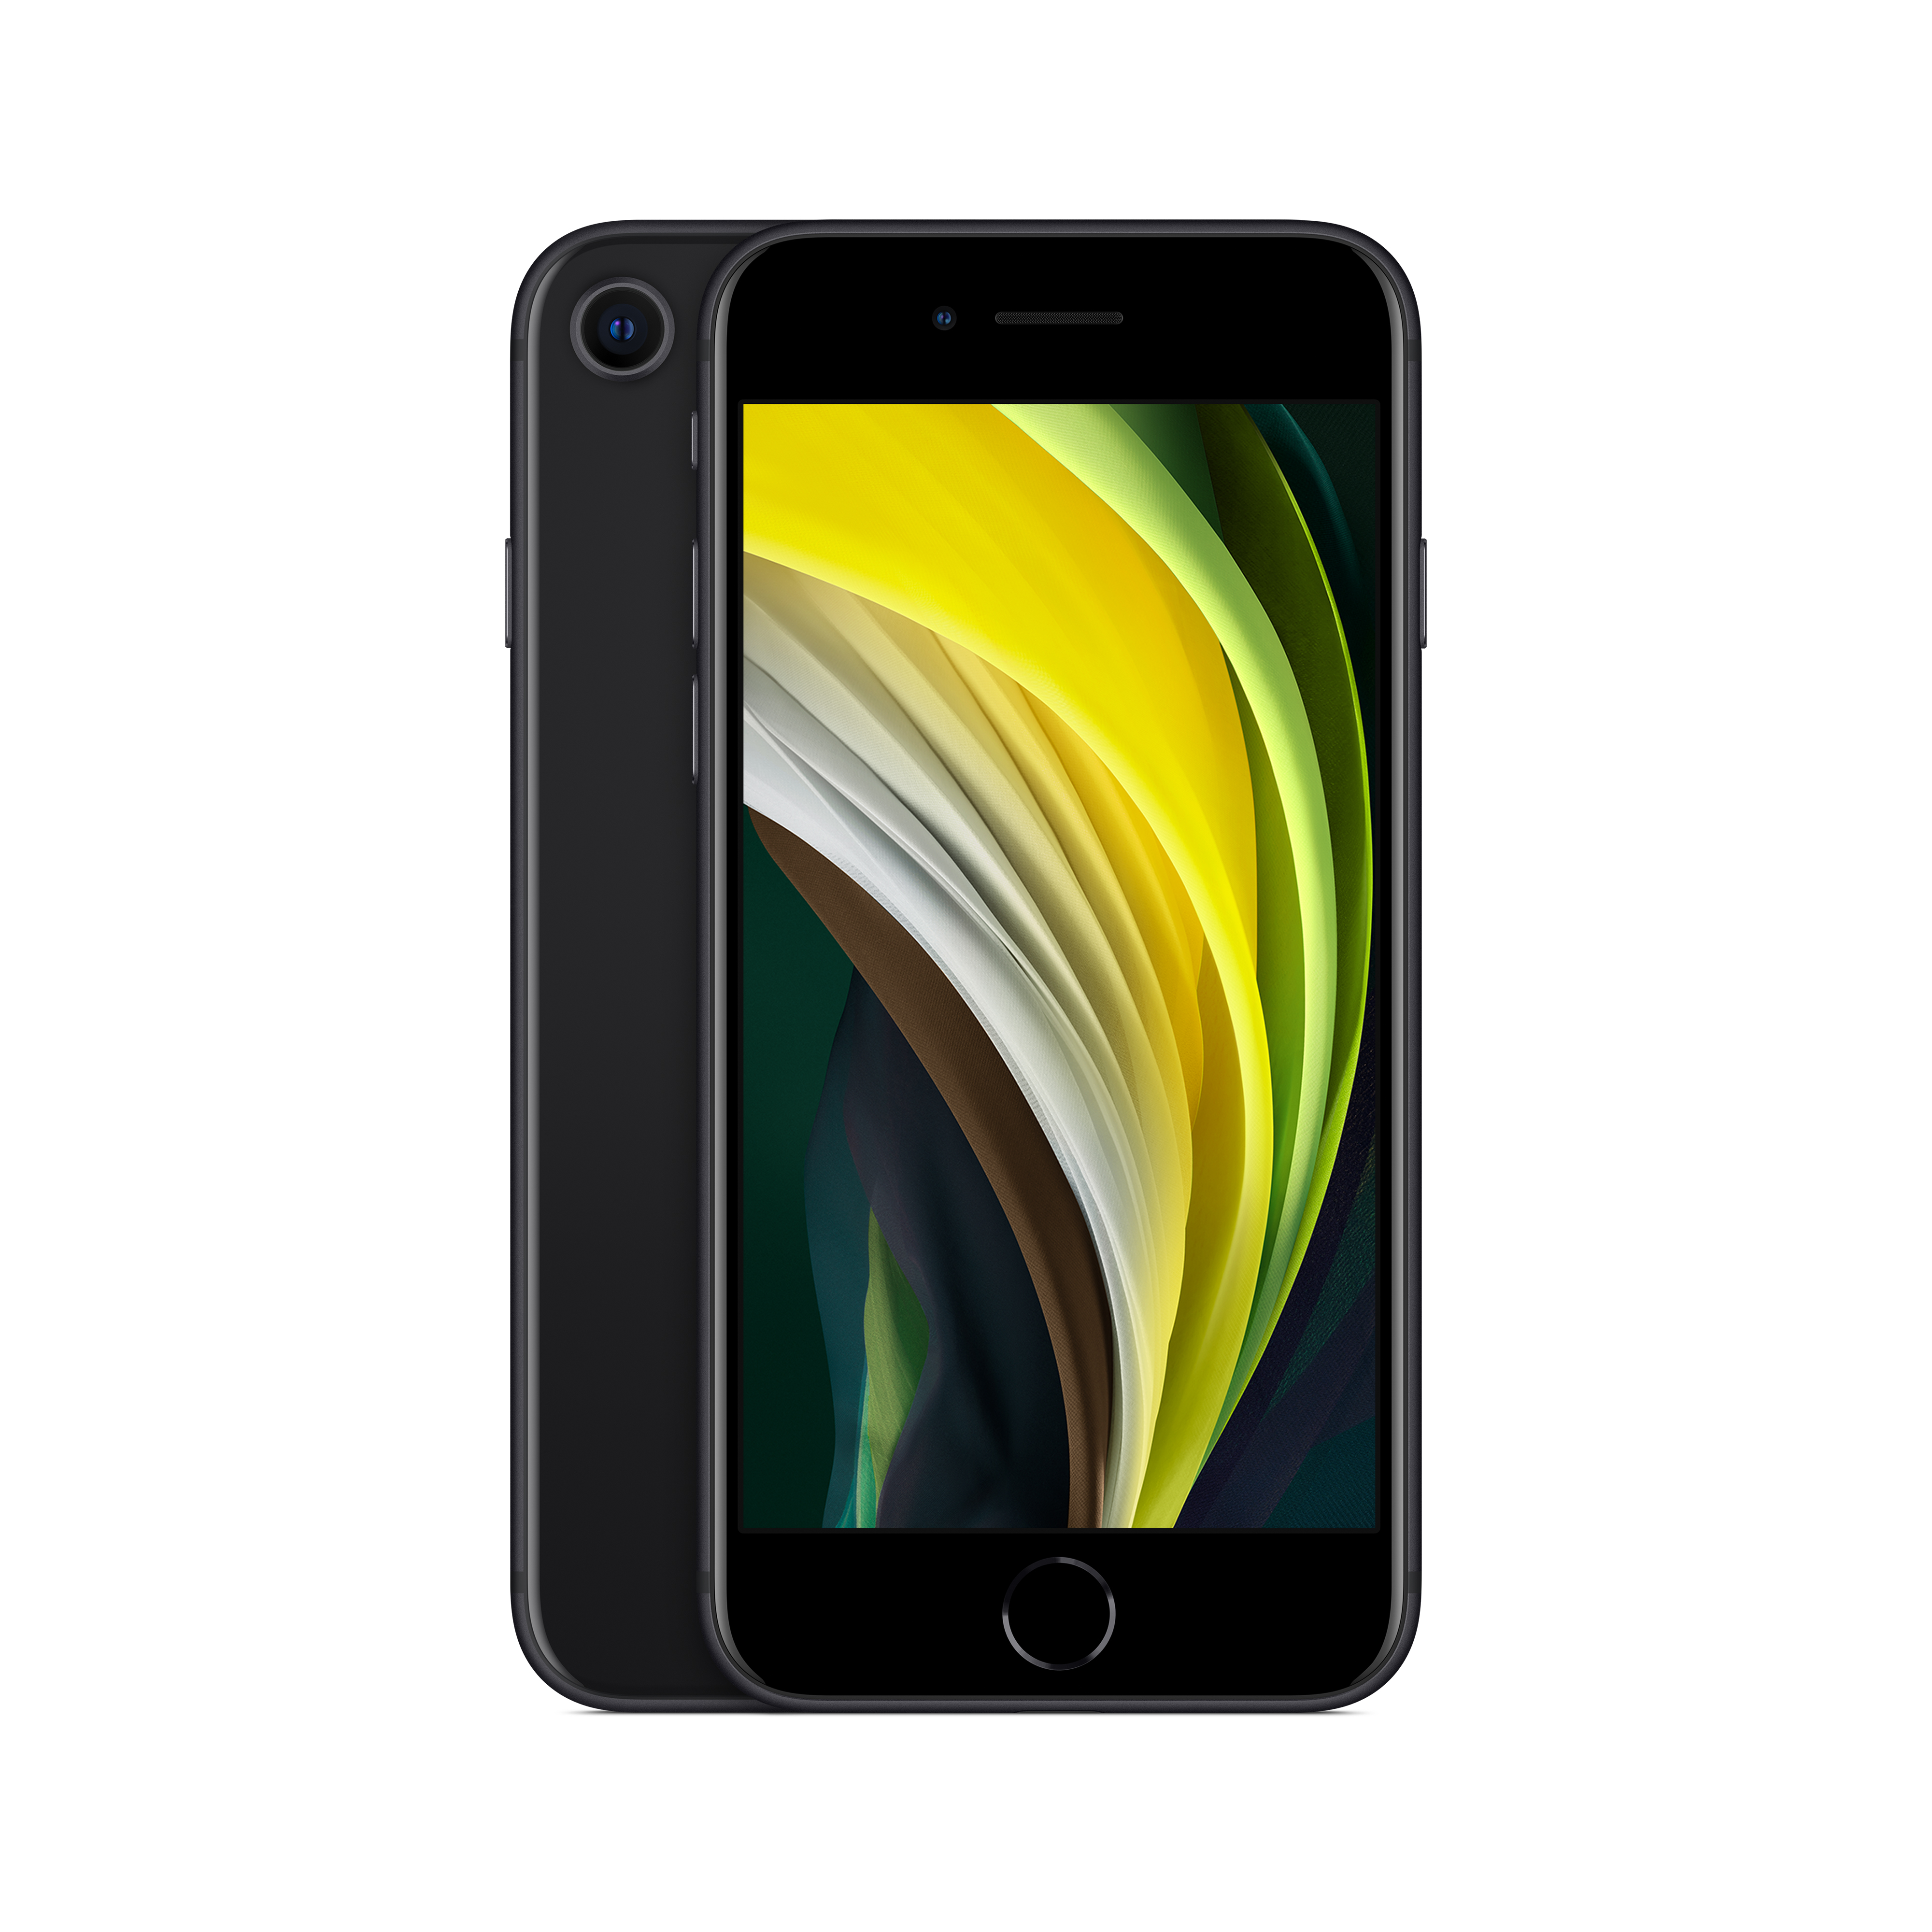 Total By Verizon Apple iPhone SE (2020), 64GB, Black- Prepaid Smartphone [Locked to Total By Verizon] - image 1 of 13